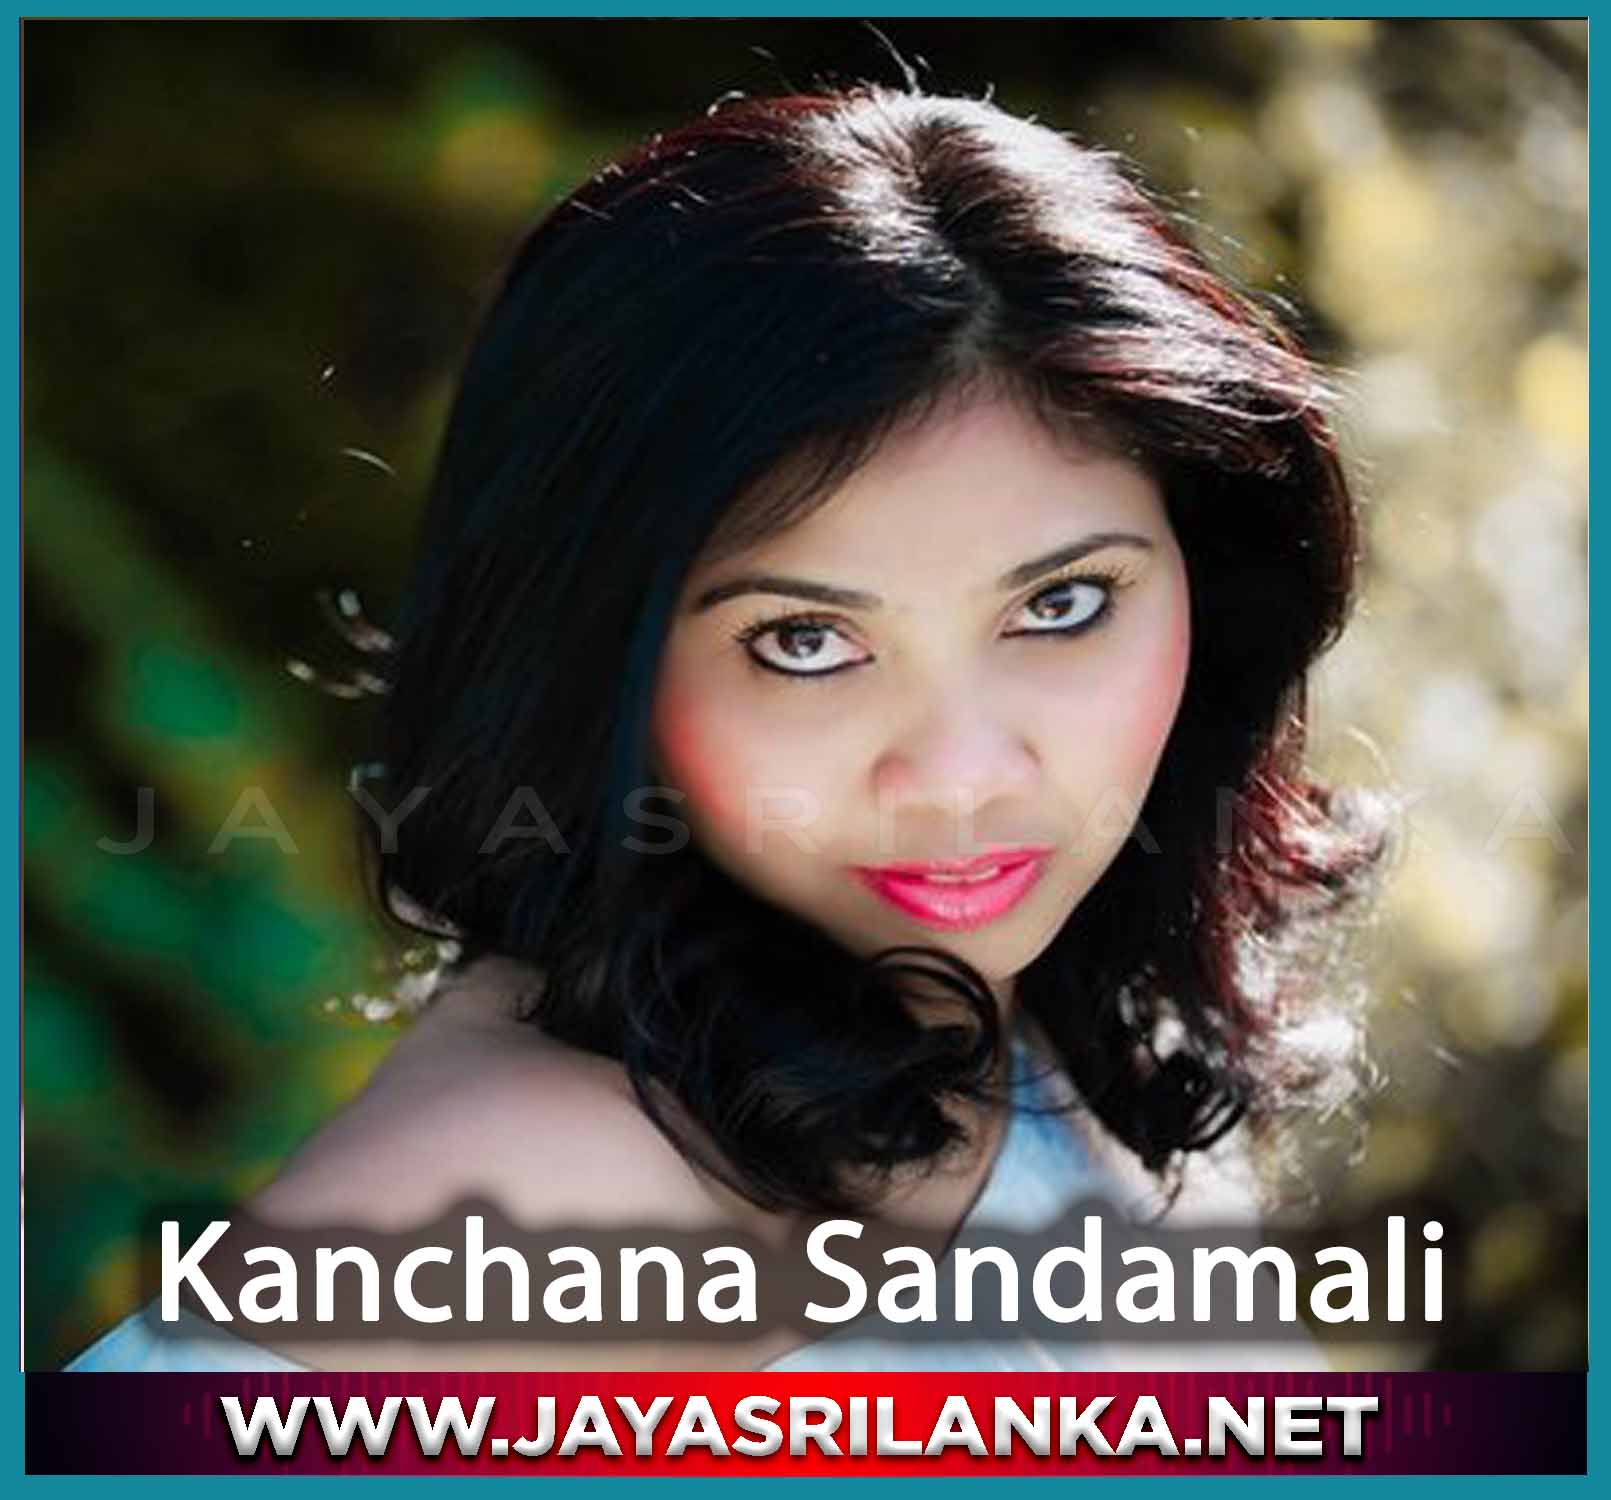 Ramaneeya Nil Thala Gan There - Kanchana Sandamali mp3 Image